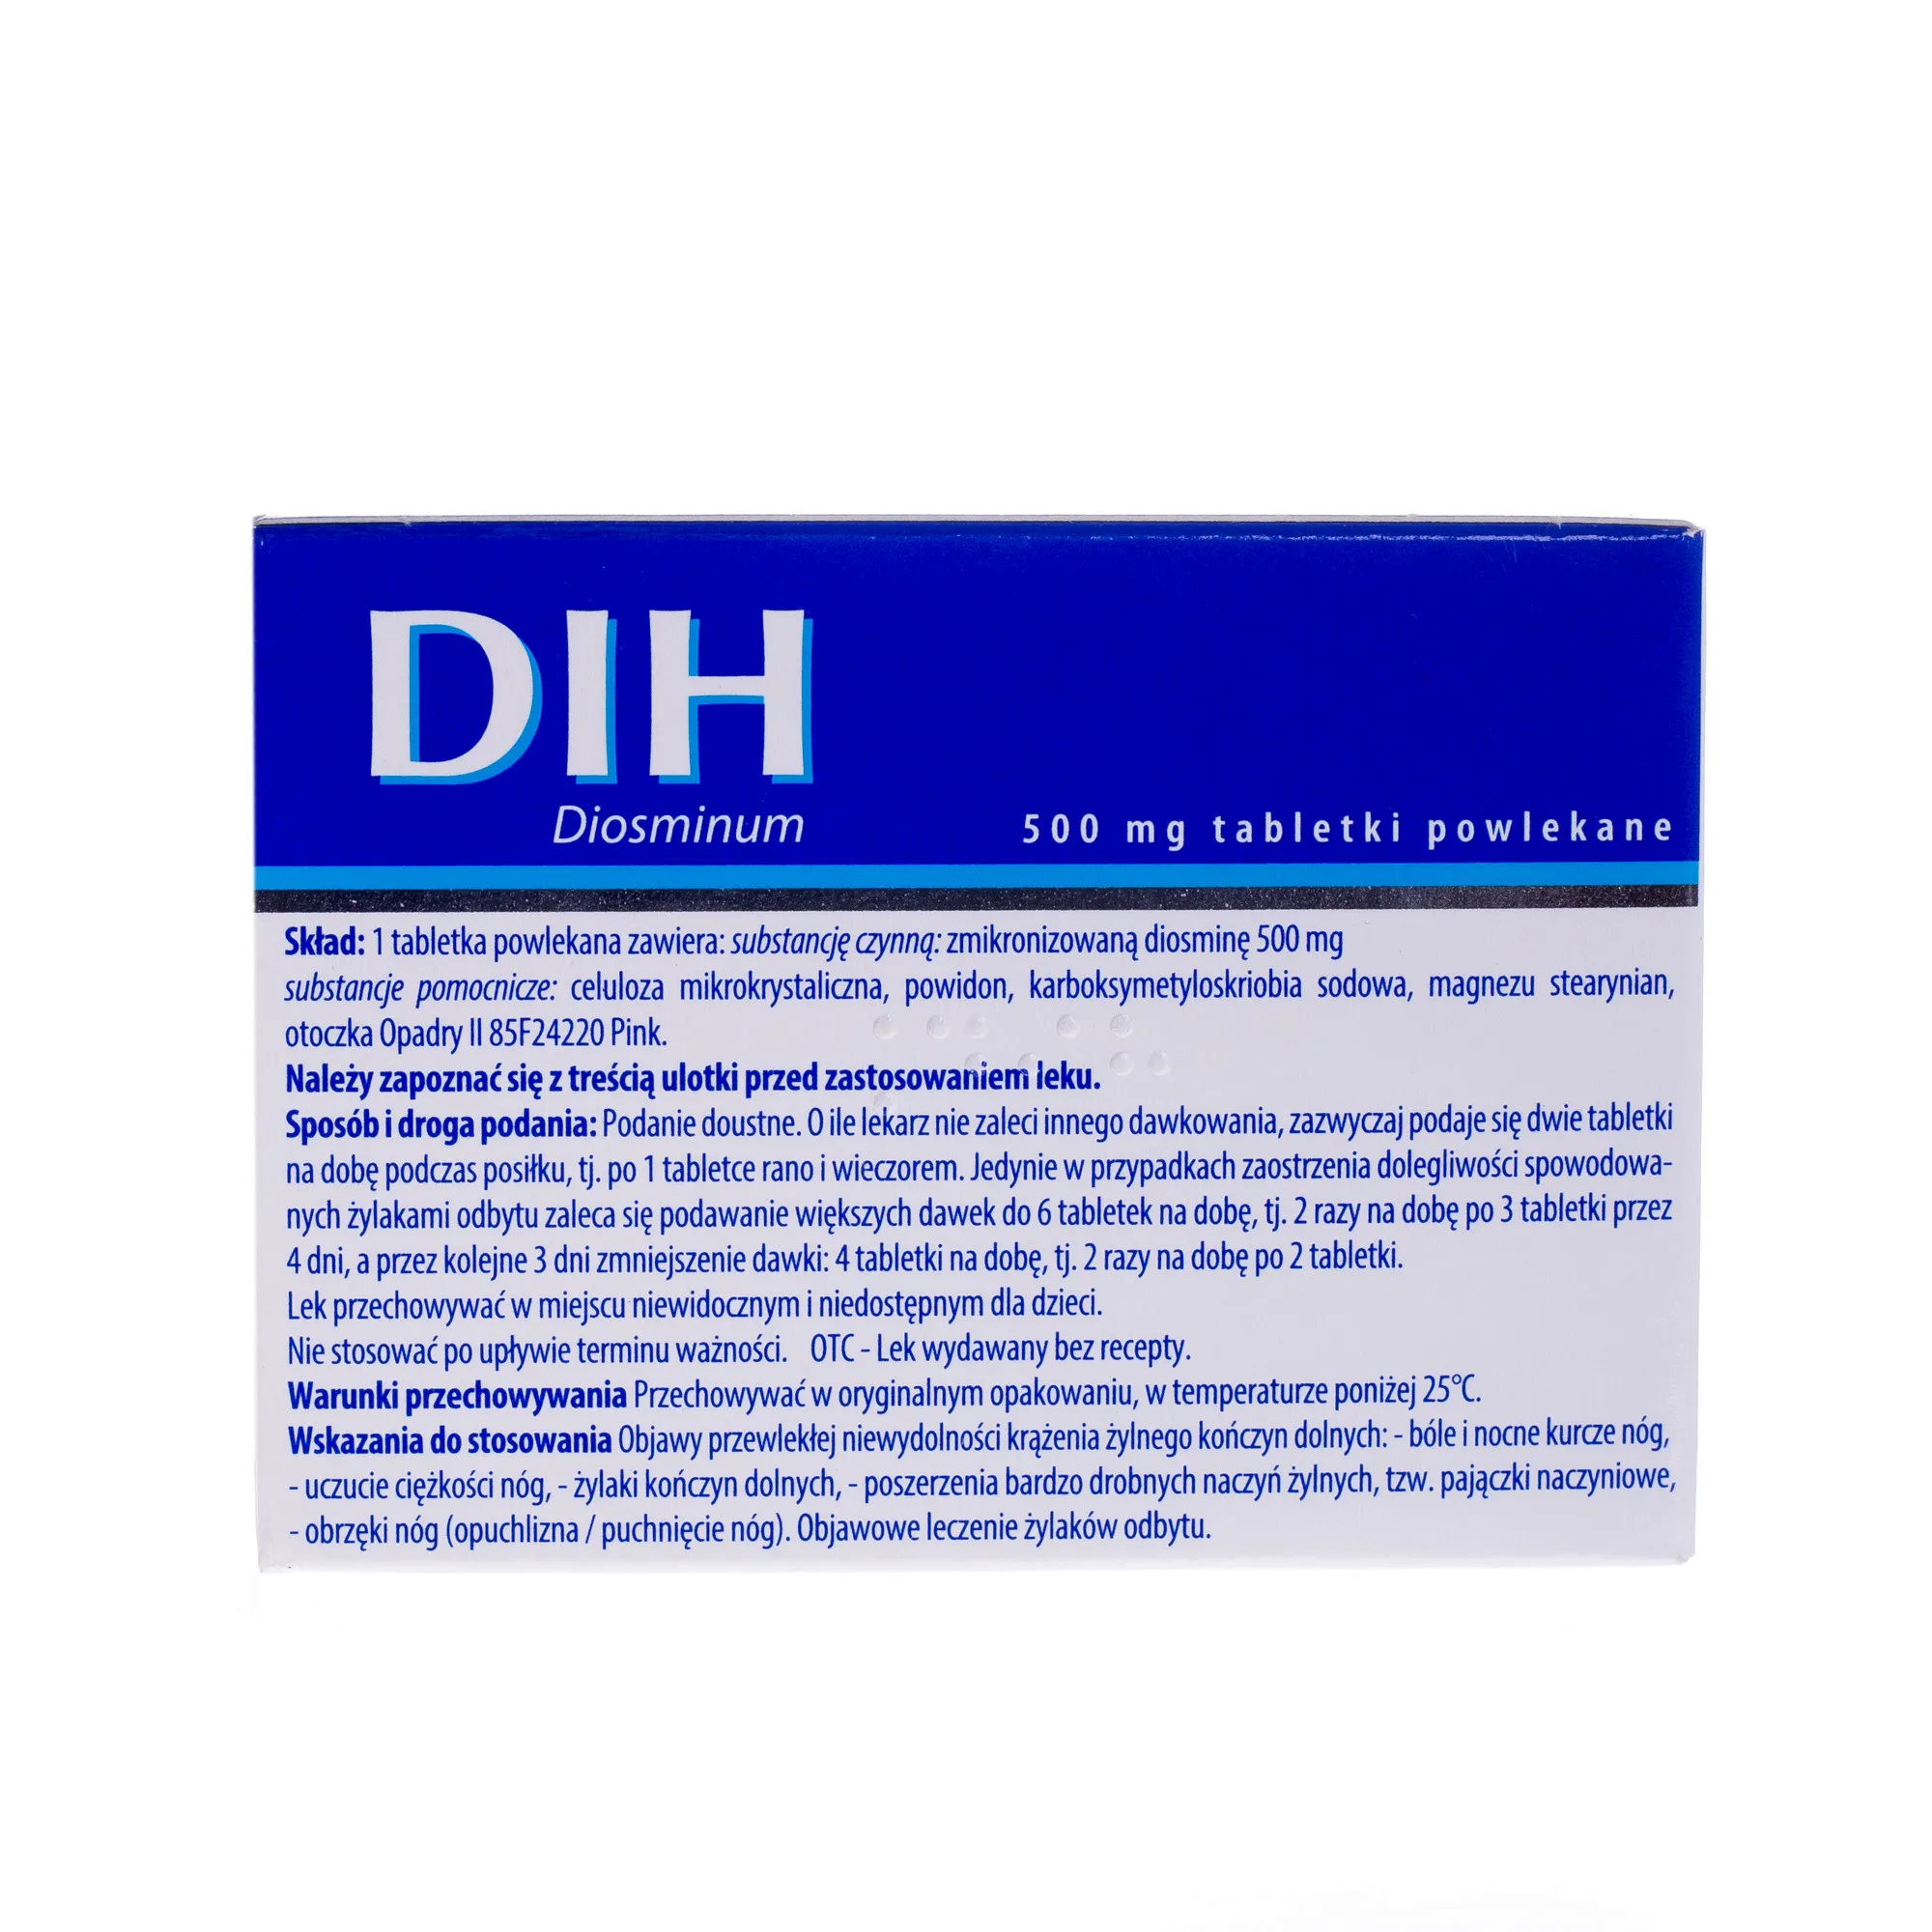 DIH Diosminum, 500 mg, 30 tabletek powlekanych 